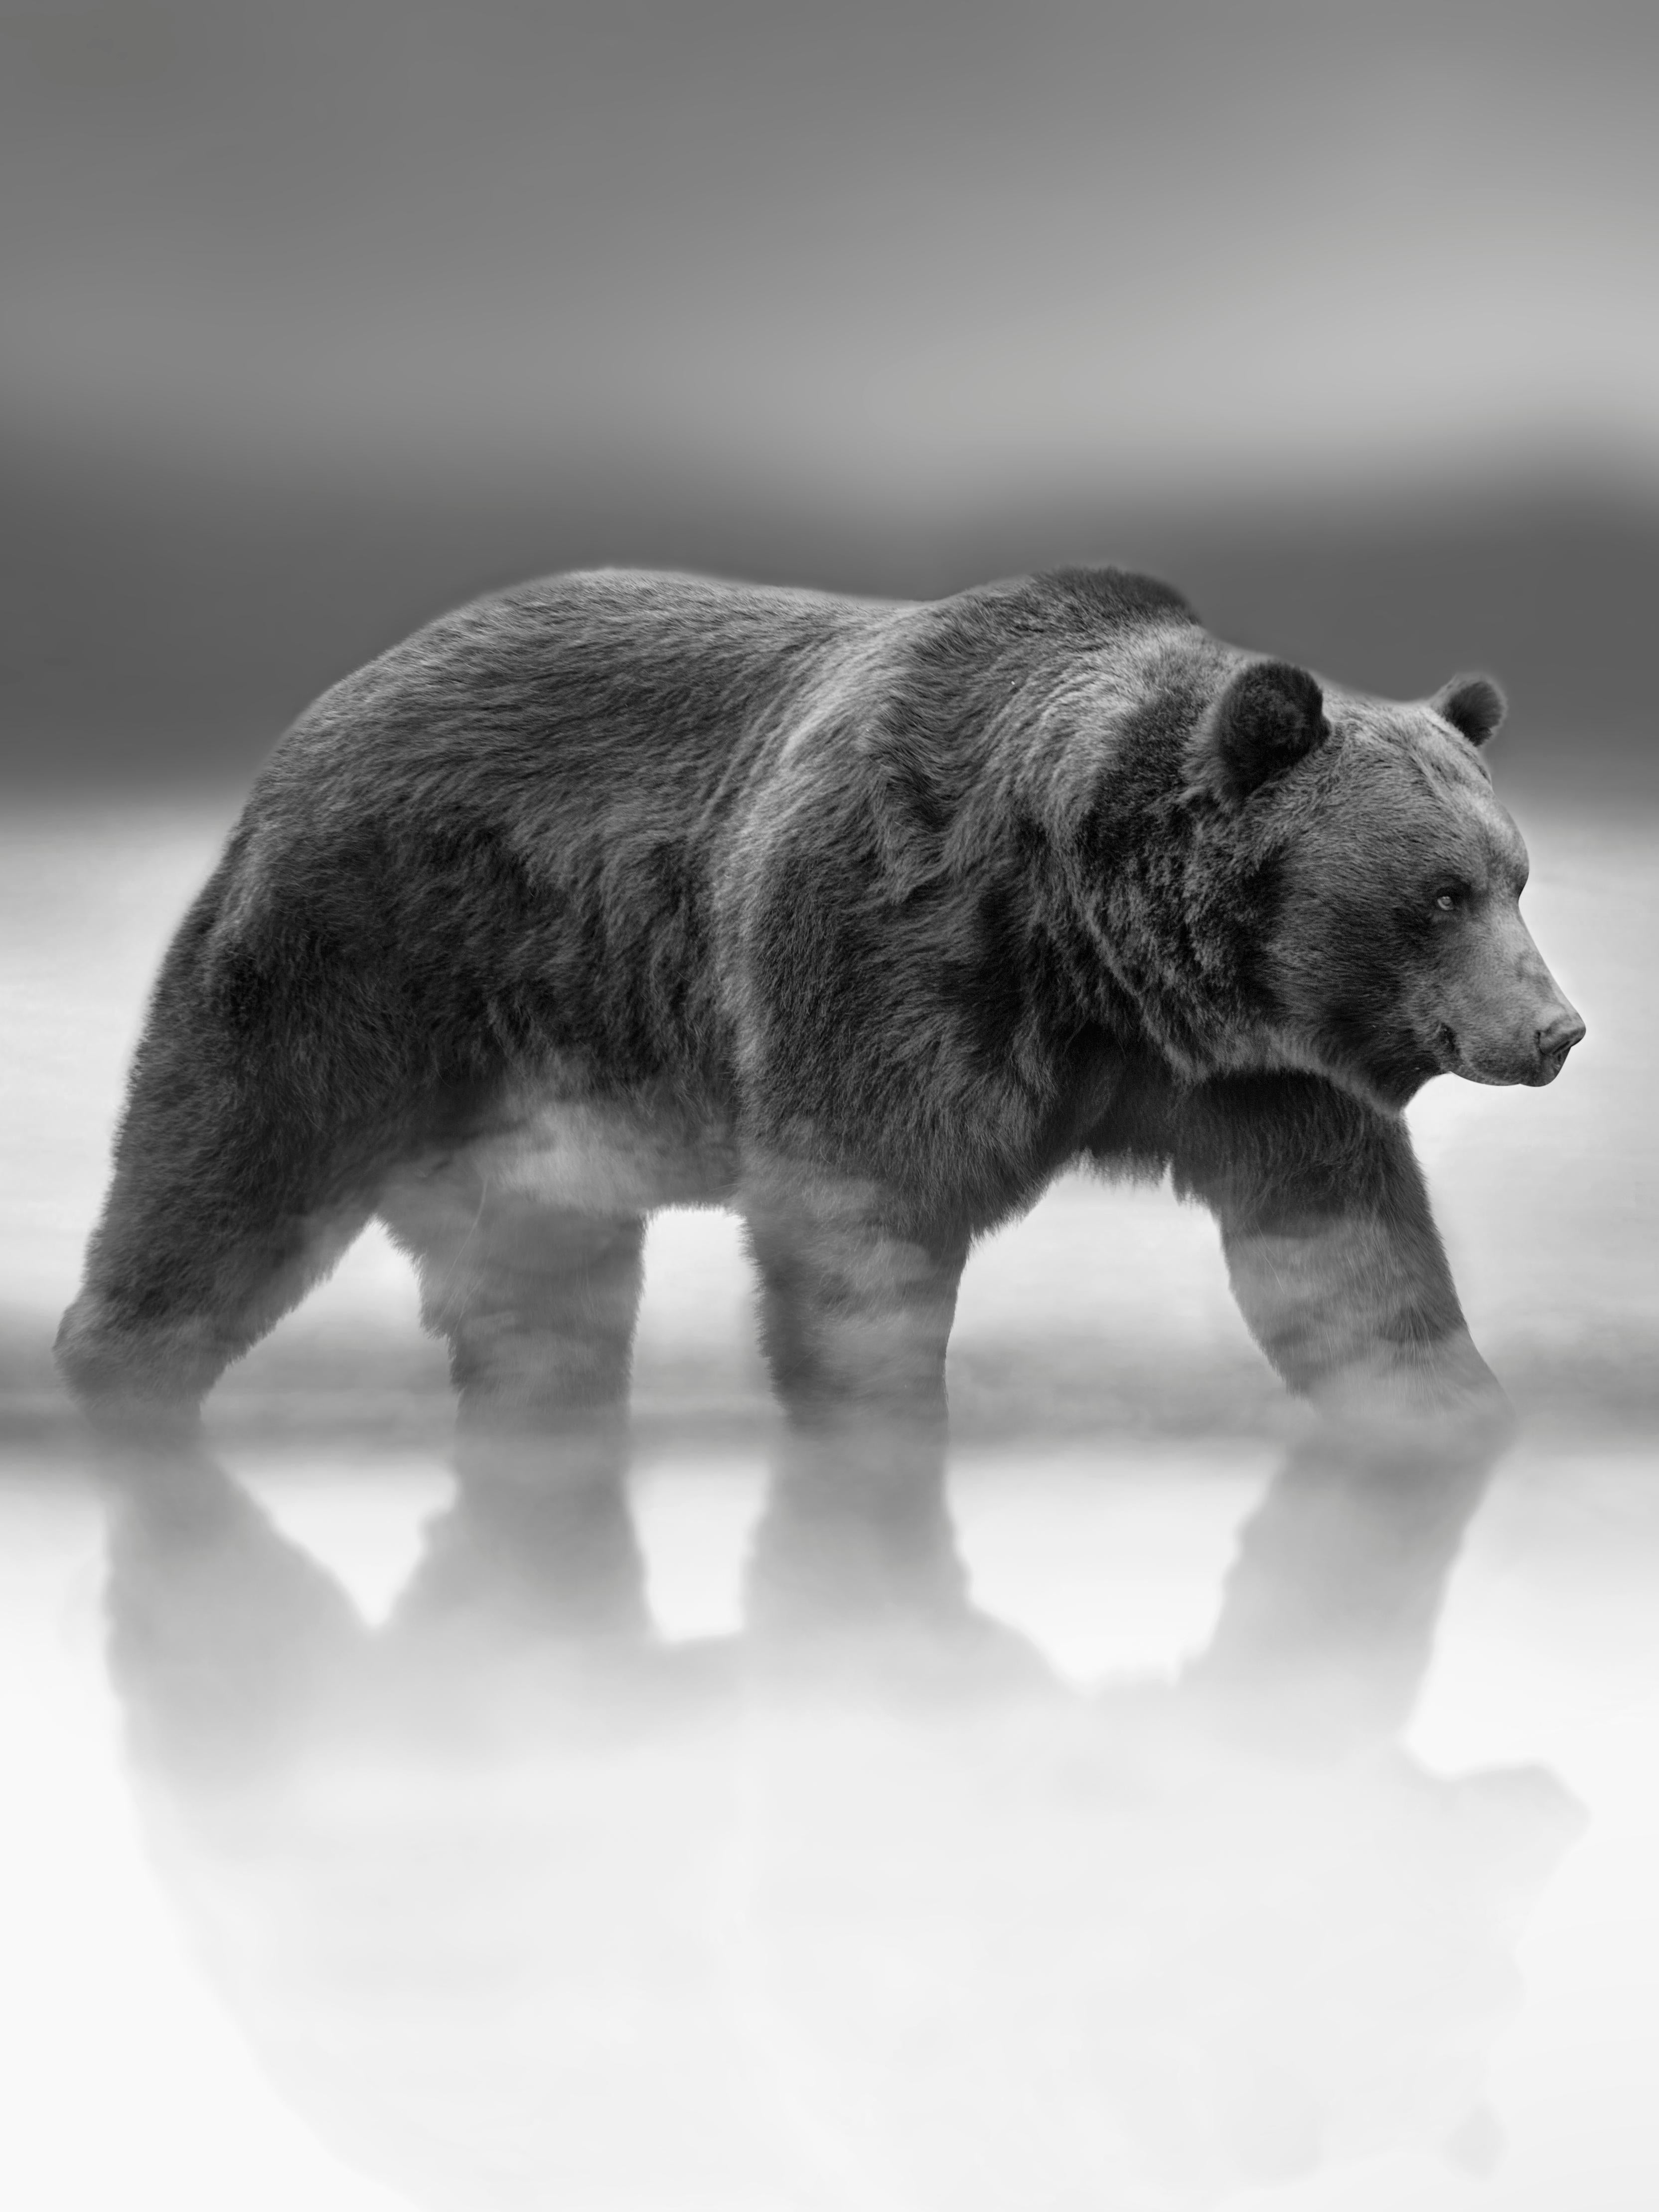 Shane Russeck Animal Print - Reflections 24x36 Black & White Photography, Kodiak Bear Photograph Grizzly